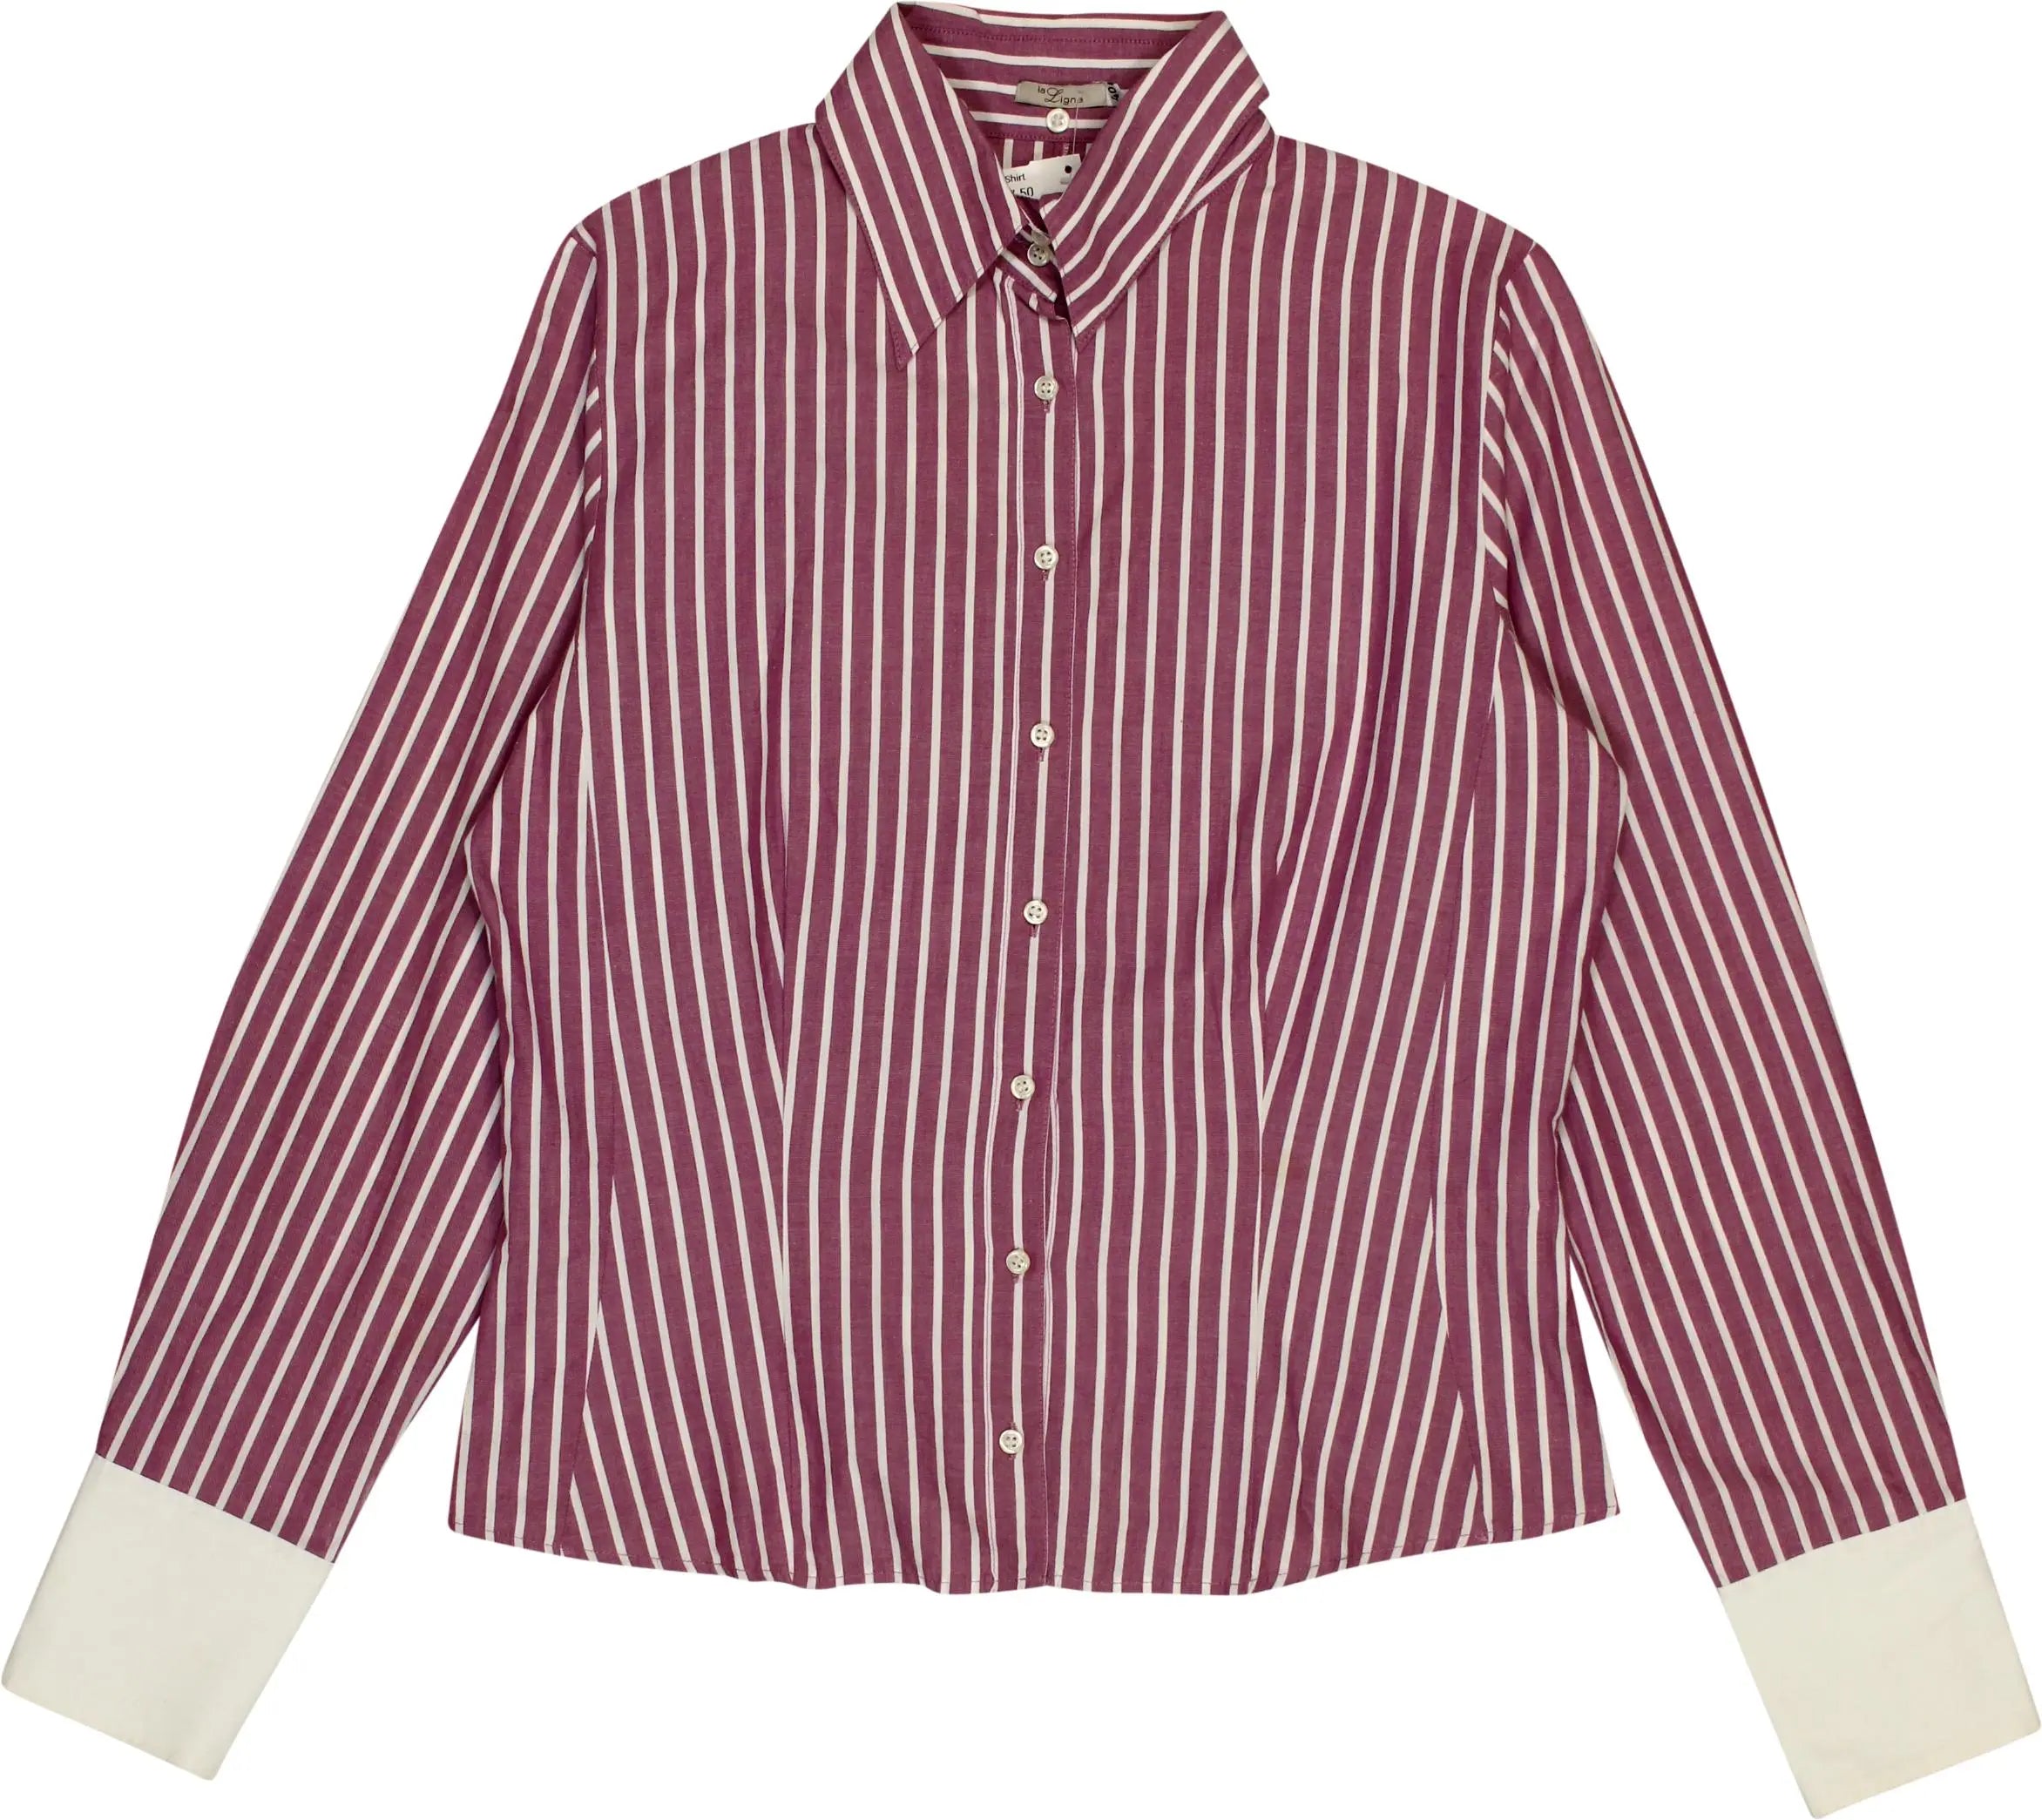 La Ligna - Striped Shirt- ThriftTale.com - Vintage and second handclothing